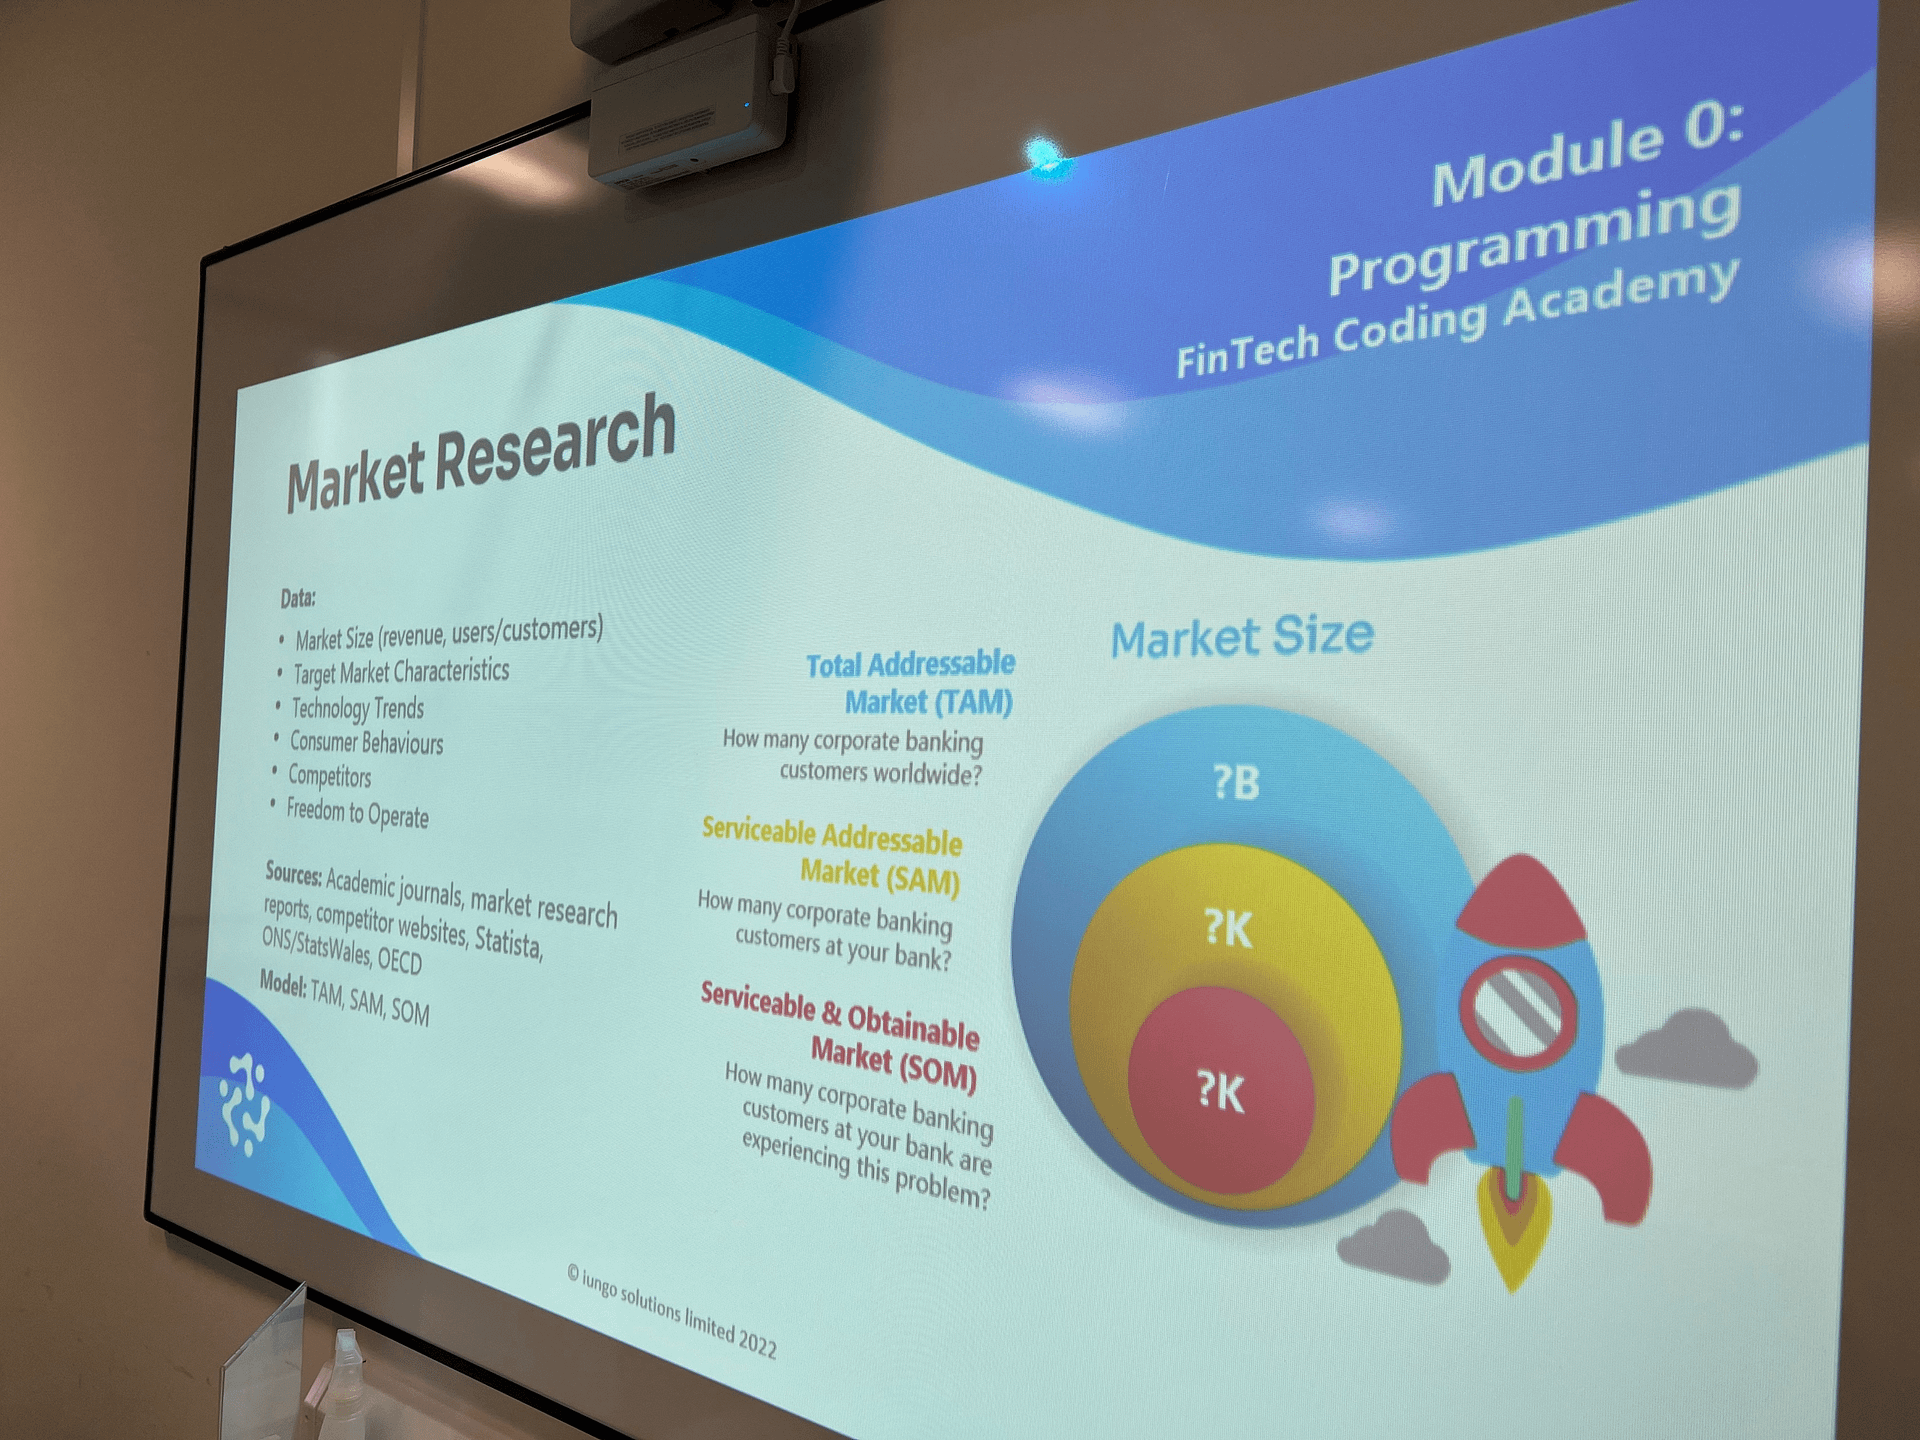 Market Research Module